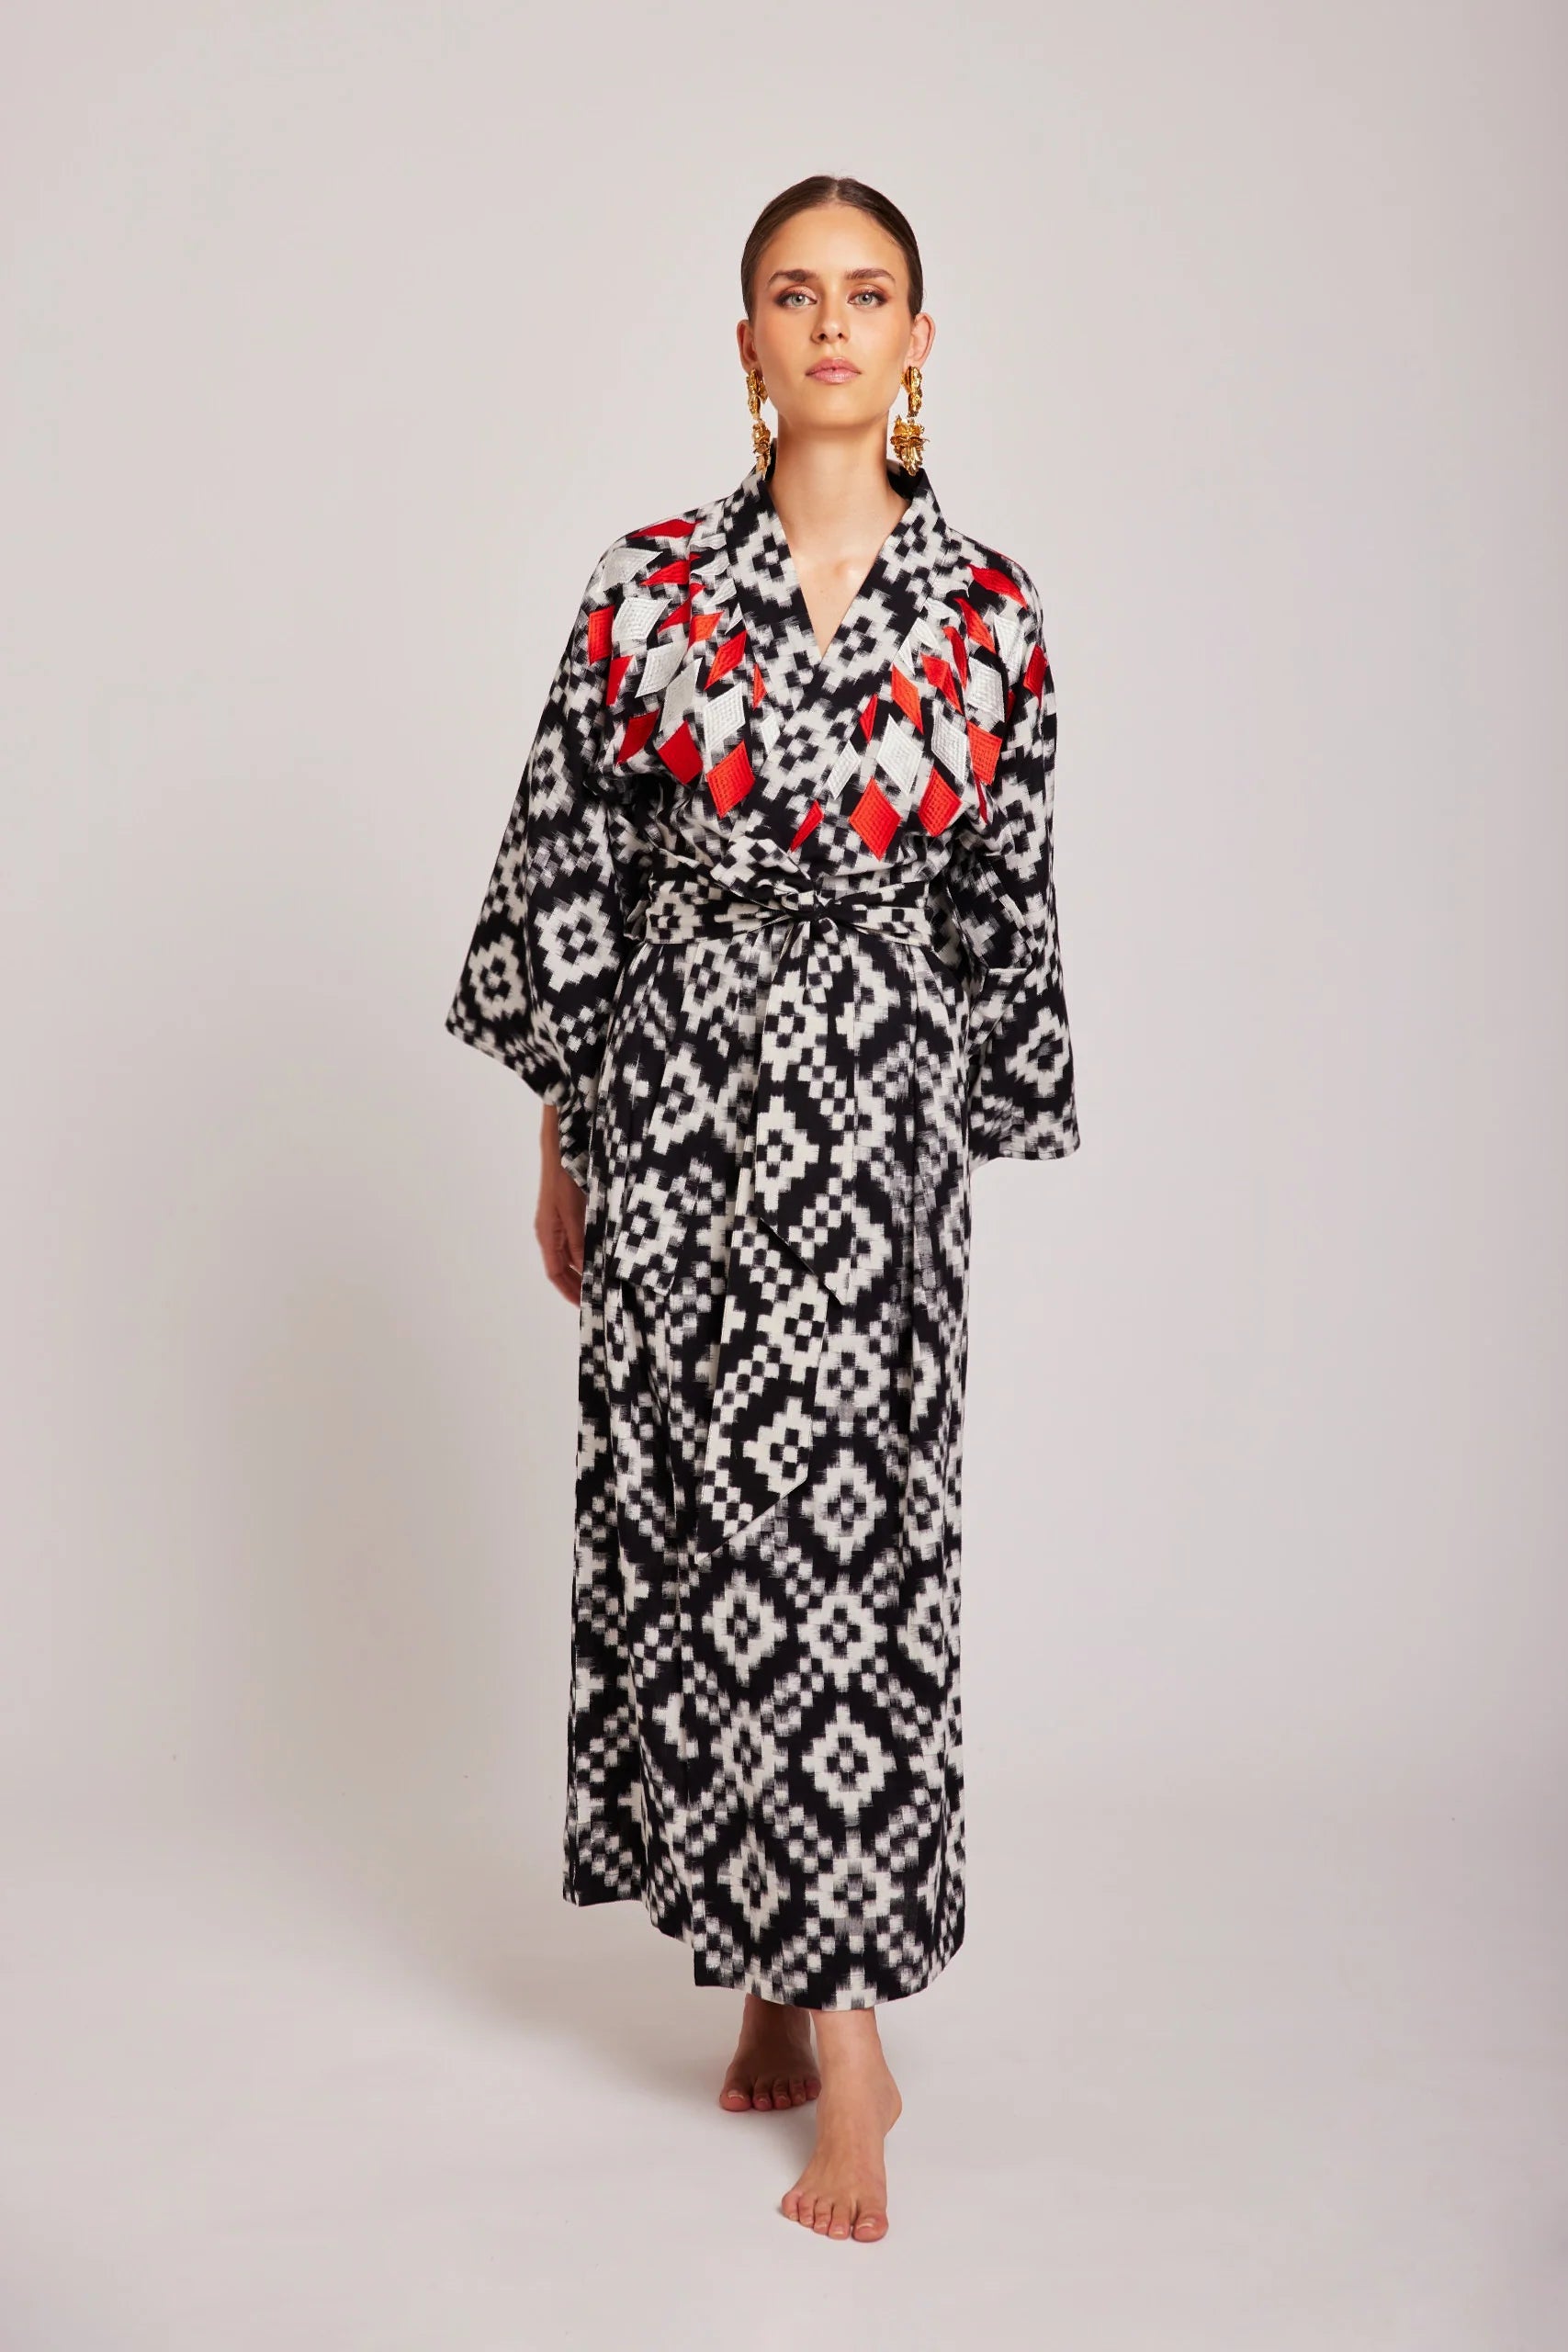 Kleed-Mombasa Black Kimono-Justbrazil